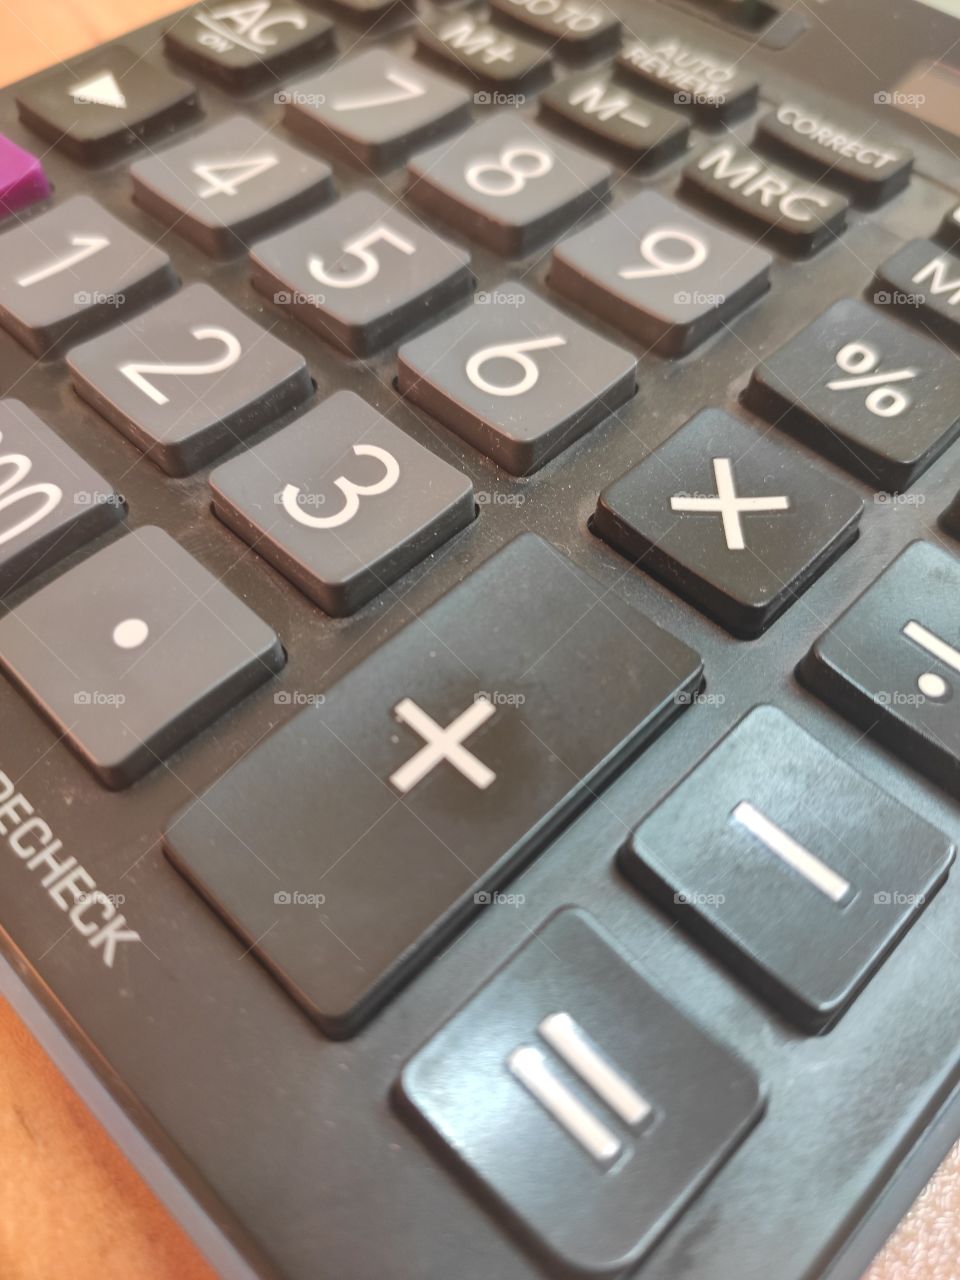 plus key on calculator with numpad economy